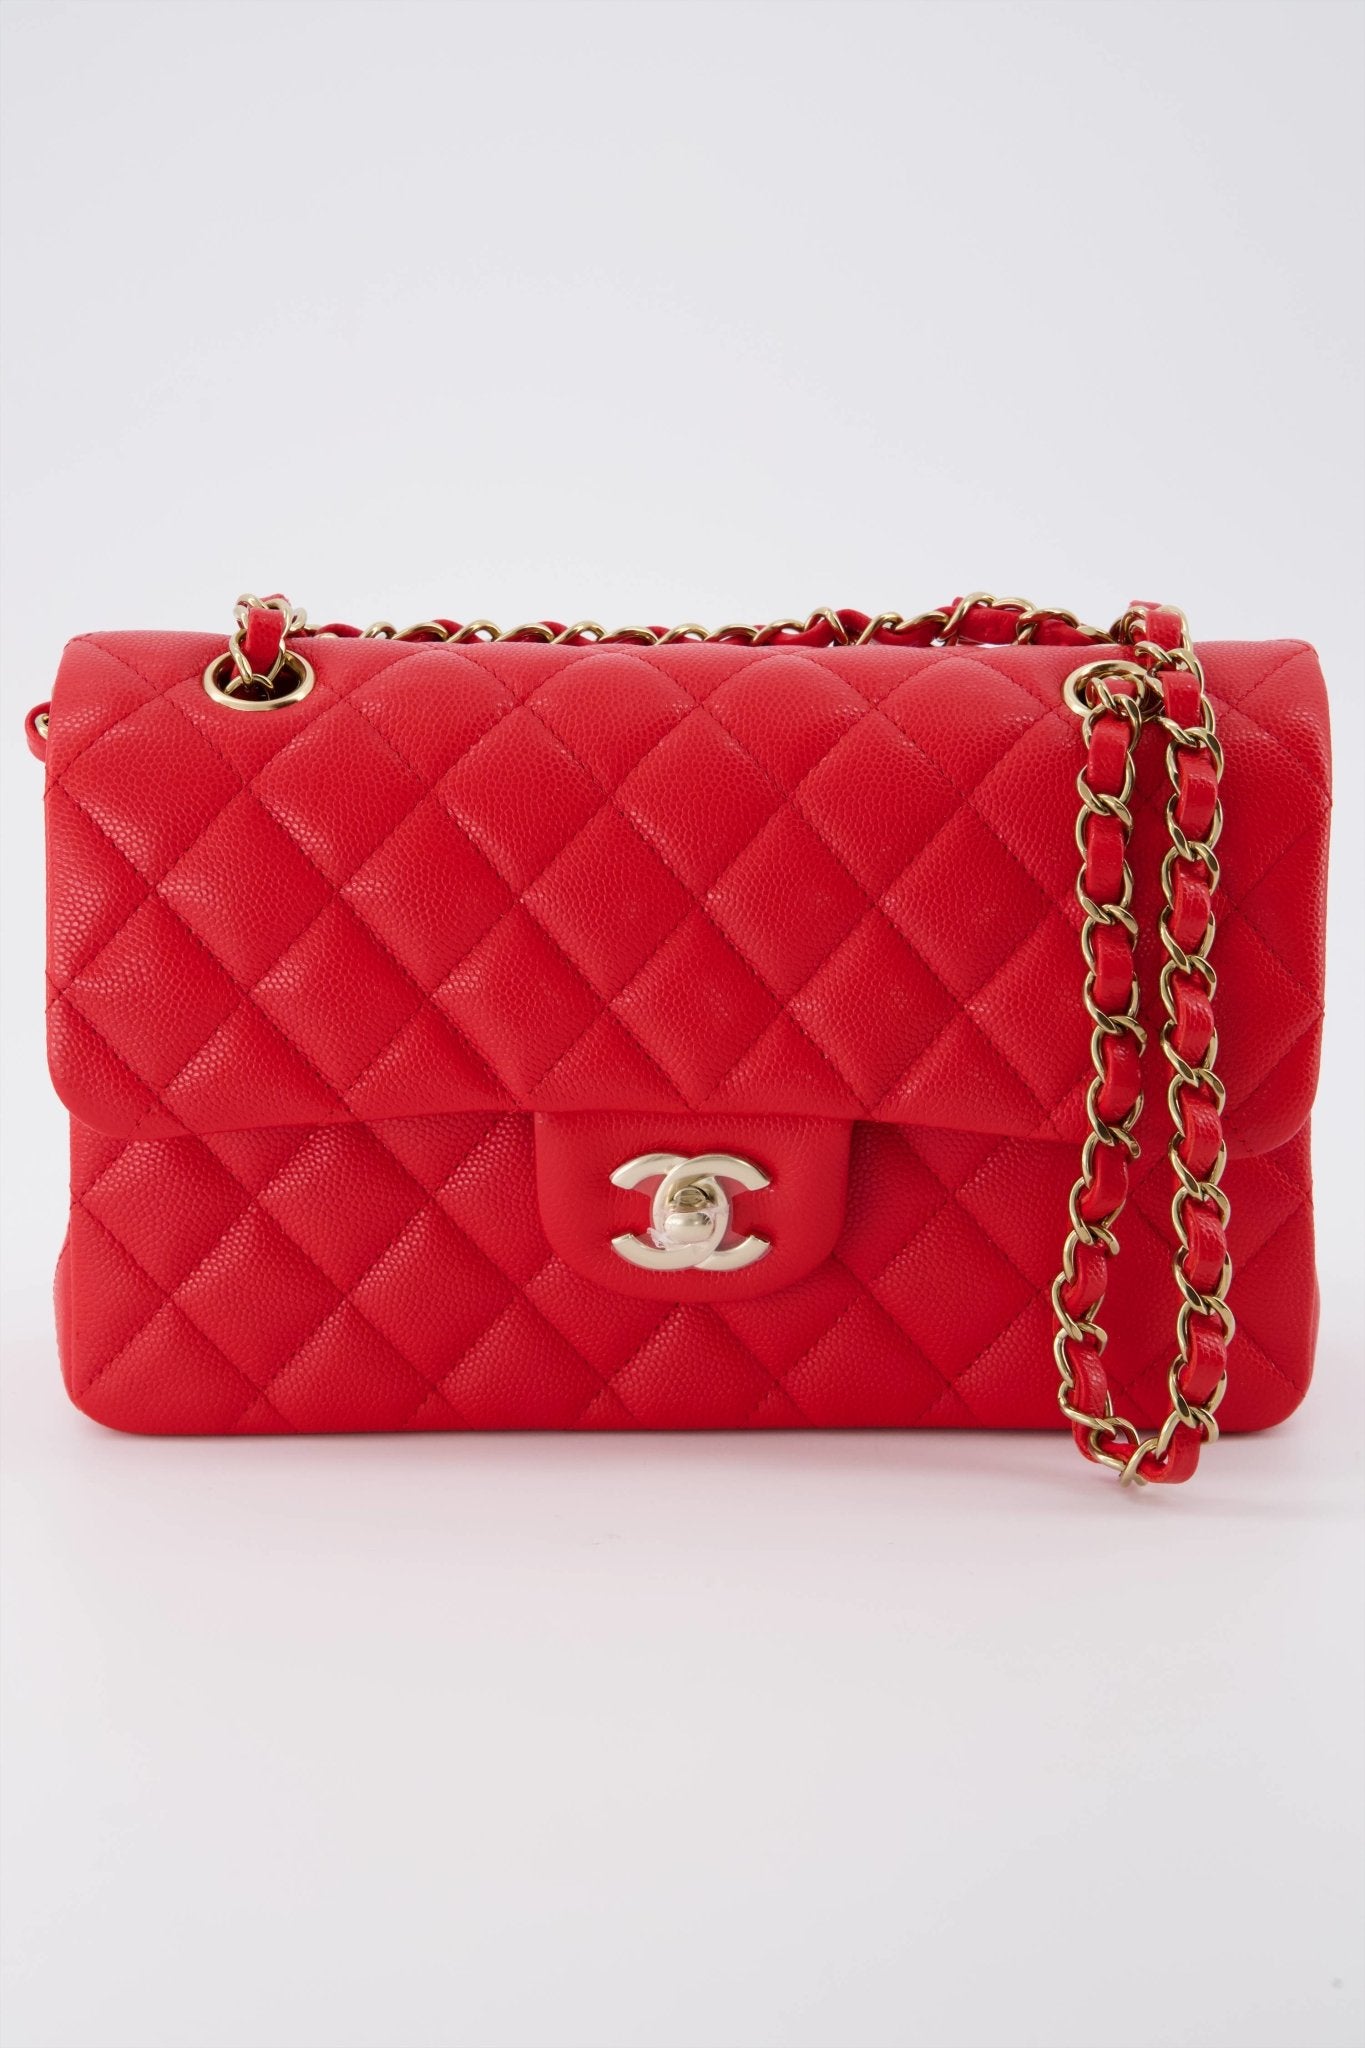 12 Most Affordable Chanel Bags in 2023 | FifthAvenueGirl.com